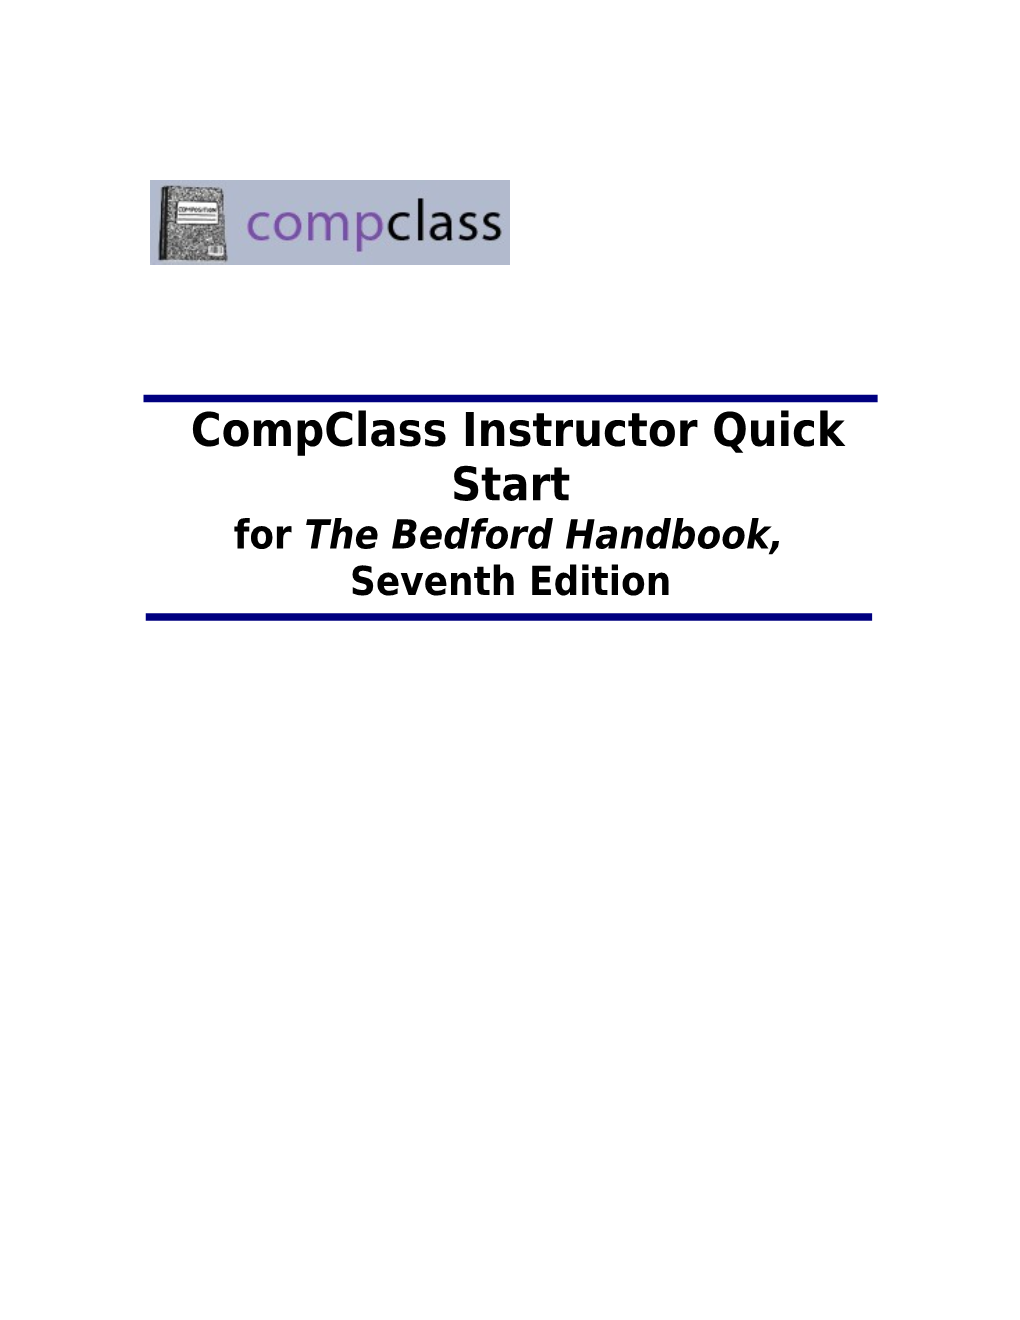 Compclass Instructor Quickstart for the Bedford Handbook, Seventh Edition